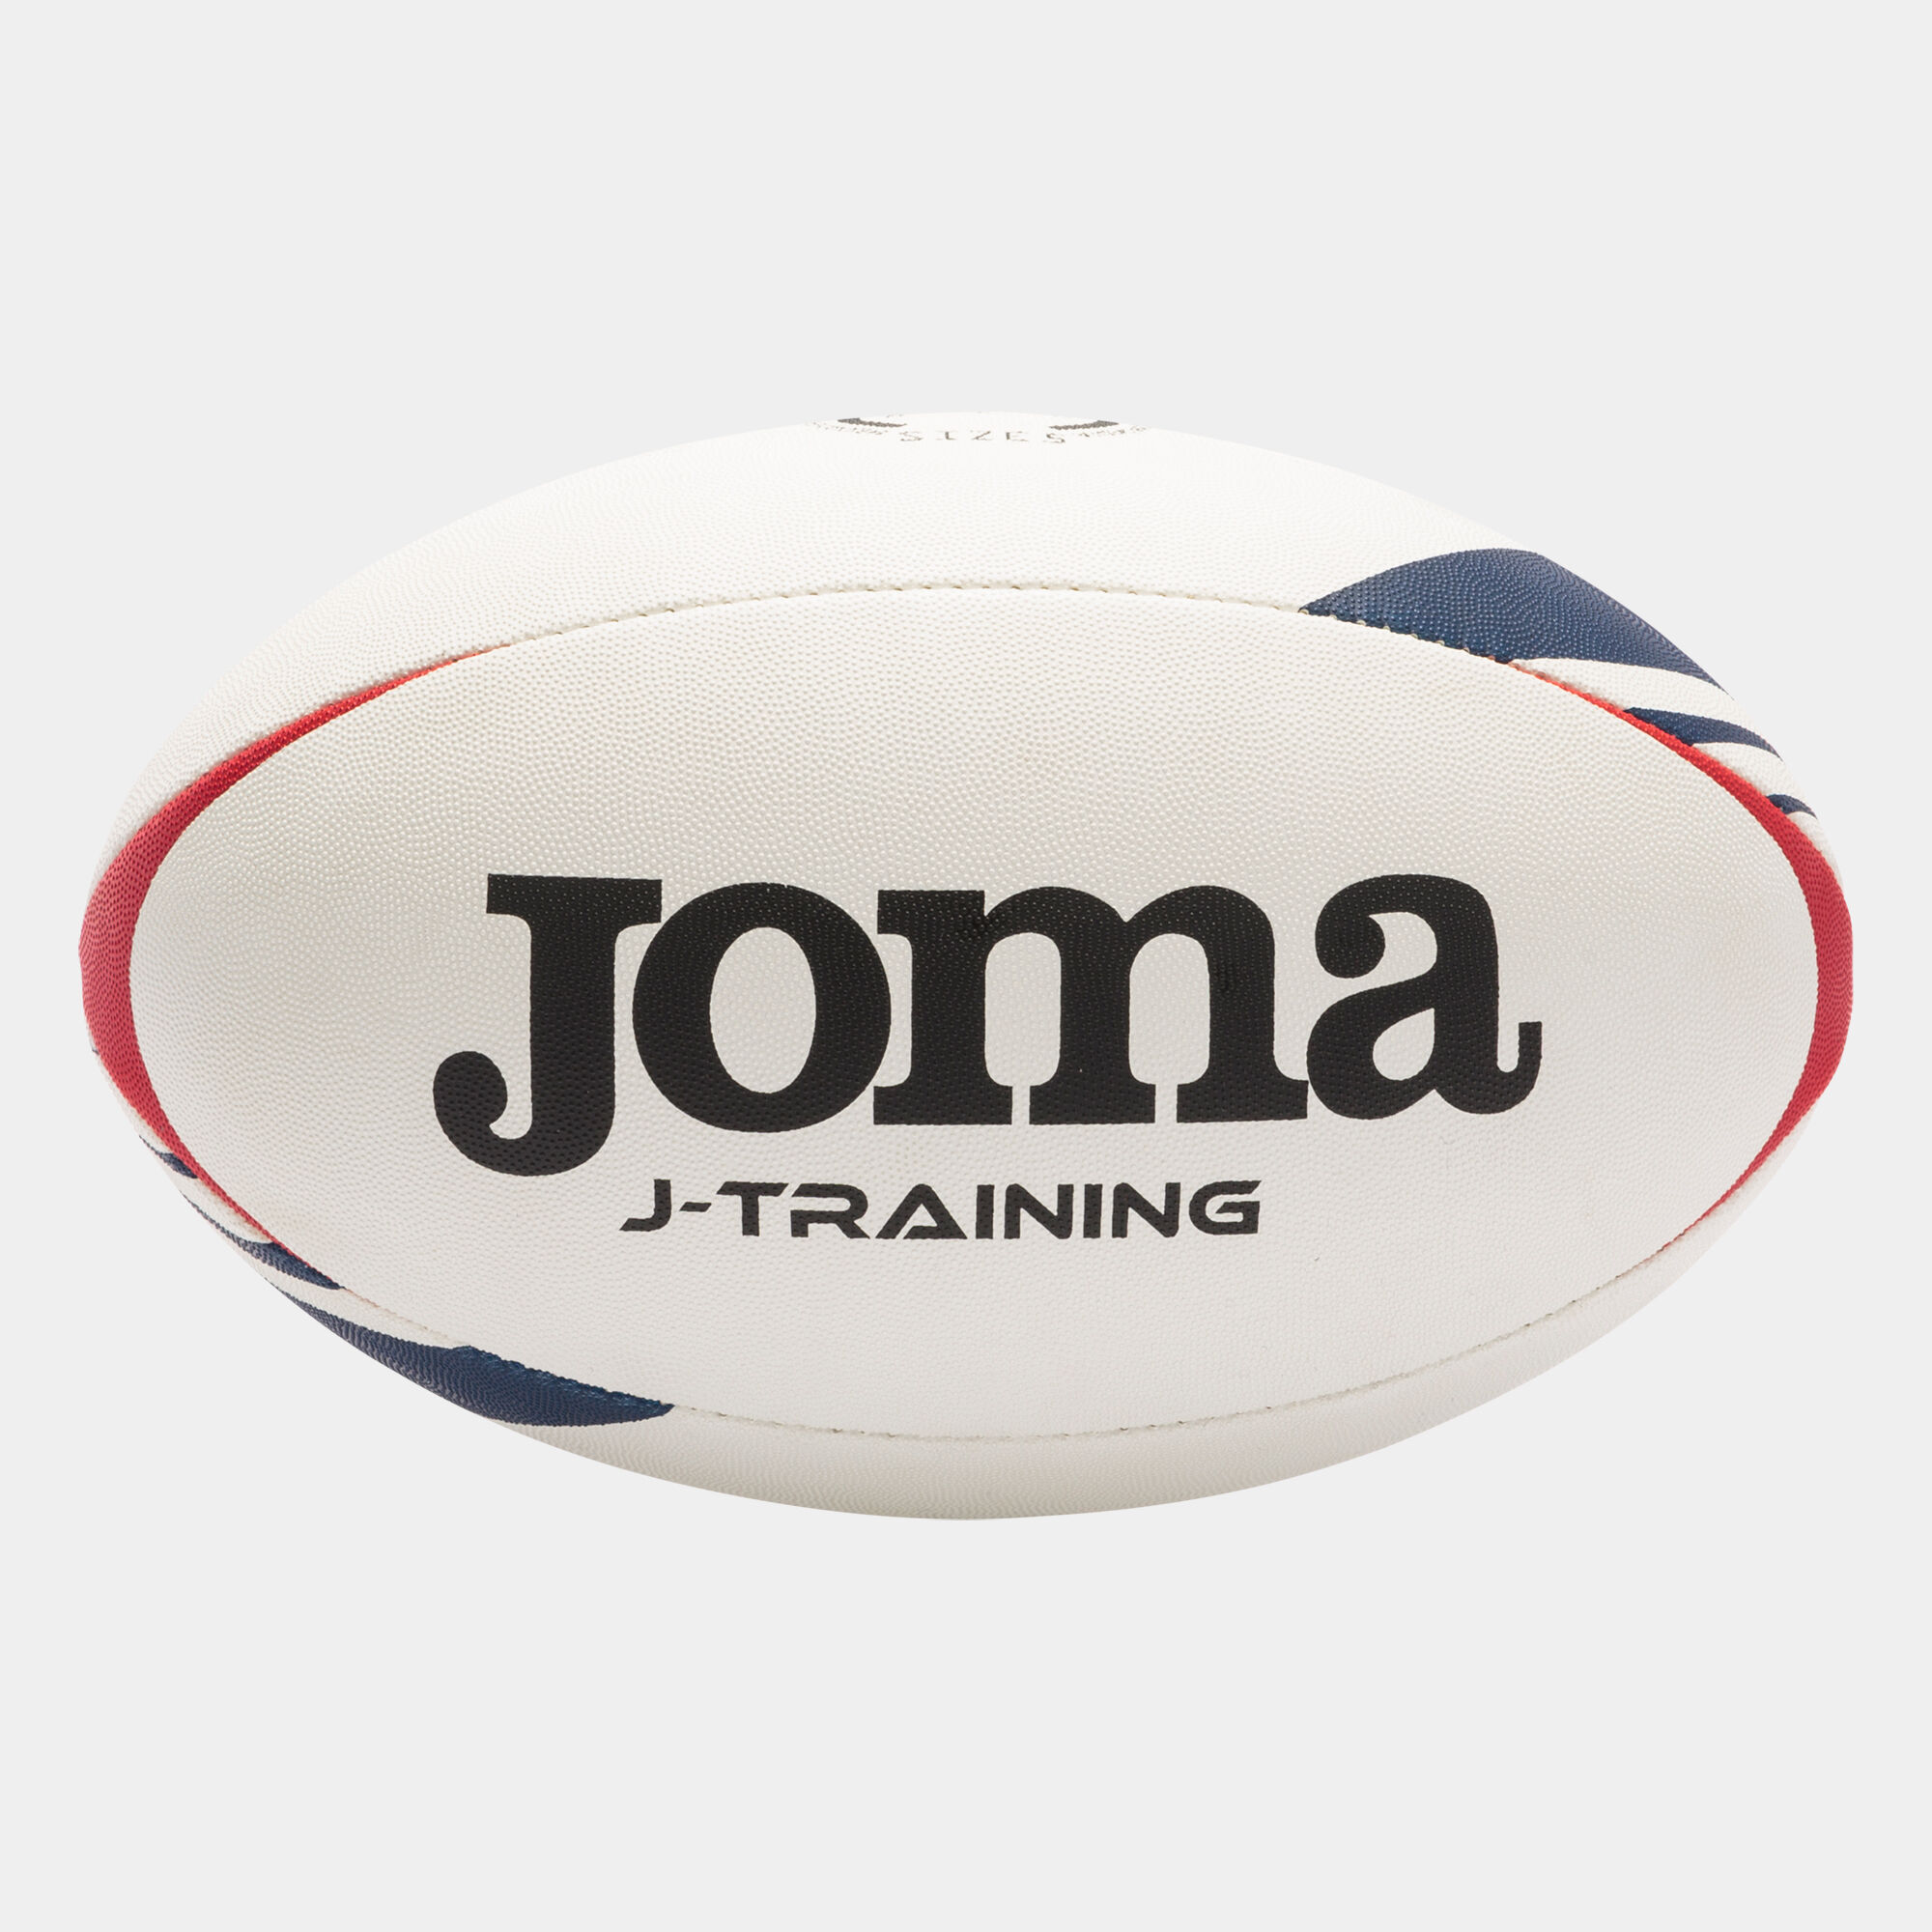 Ballon rugby J-Training blanc rouge